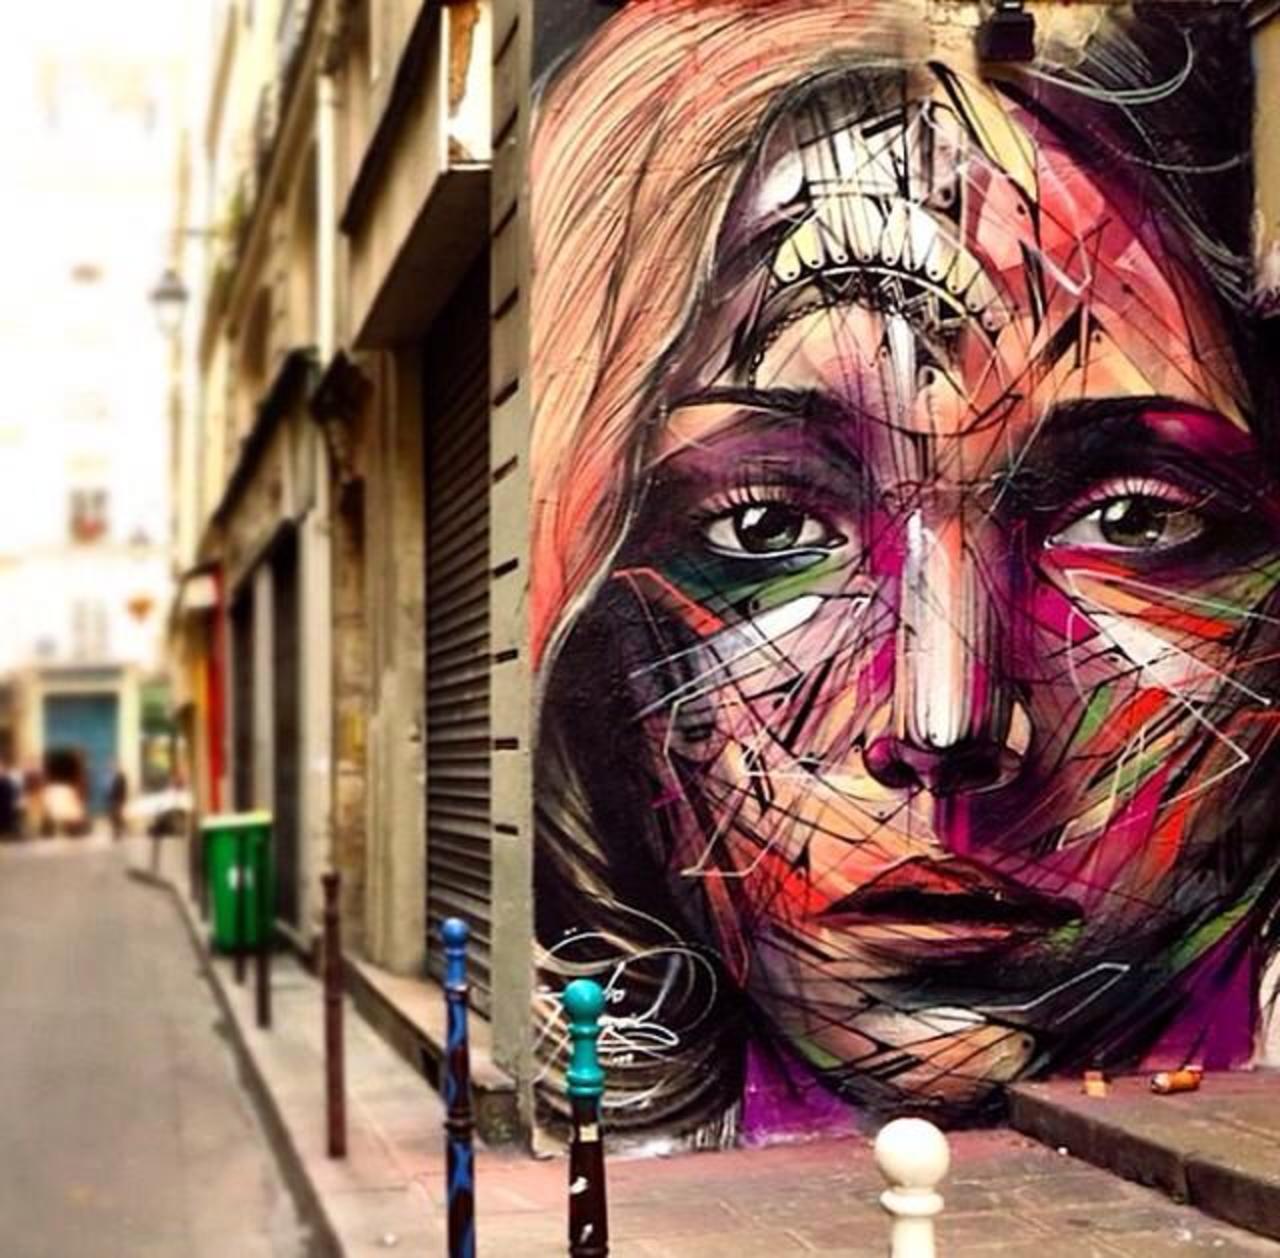 Artist @alexhopare wonderful new Street Art mural • Paris, France @lifeisbeautiful 
#art #Paris #graffiti #streetart http://t.co/7NcKYnuPE3”